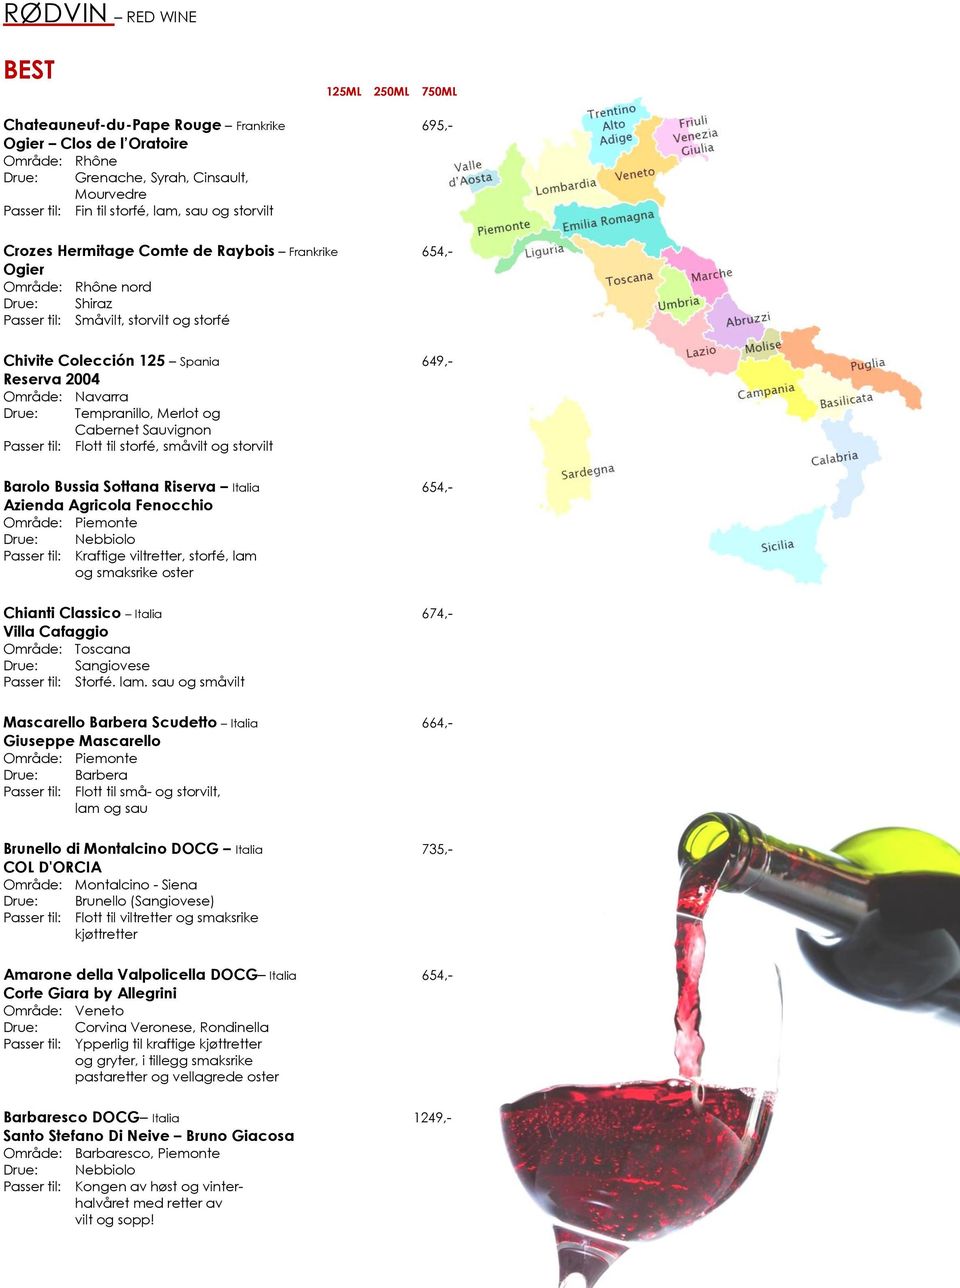 storfé, småvilt og storvilt Barolo Bussia Sottana Riserva Italia 654,- Azienda Agricola Fenocchio Område: Piemonte Nebbiolo Kraftige viltretter, storfé, lam og smaksrike oster Chianti Classico Italia